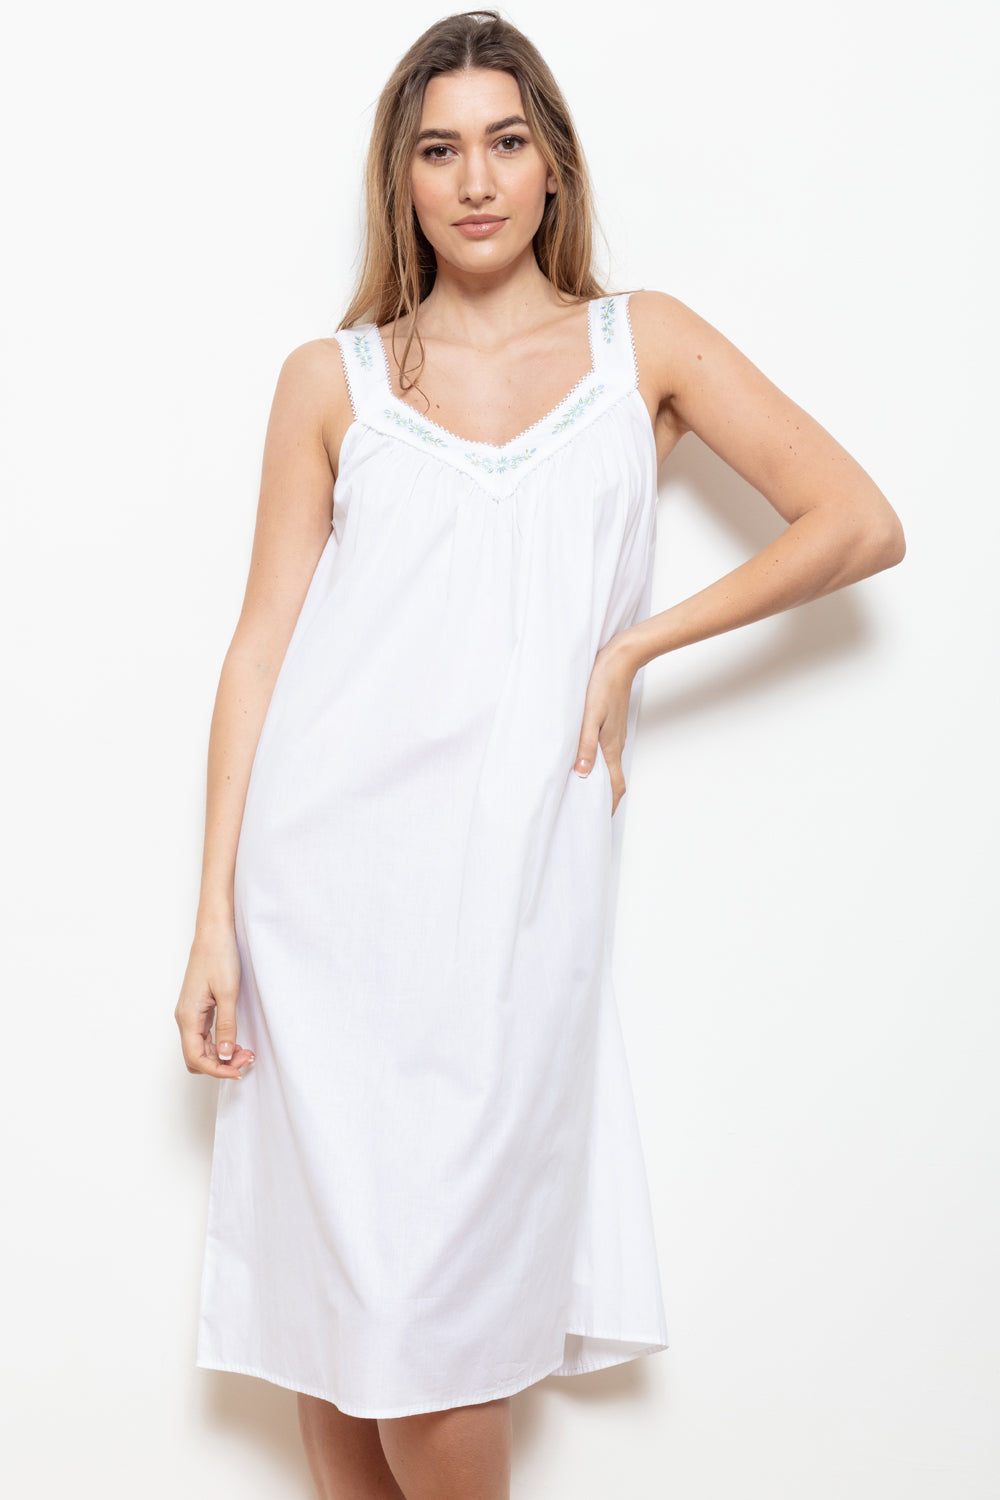 Cottonreal 'Gail' Cotton Wide Strap Nightdress